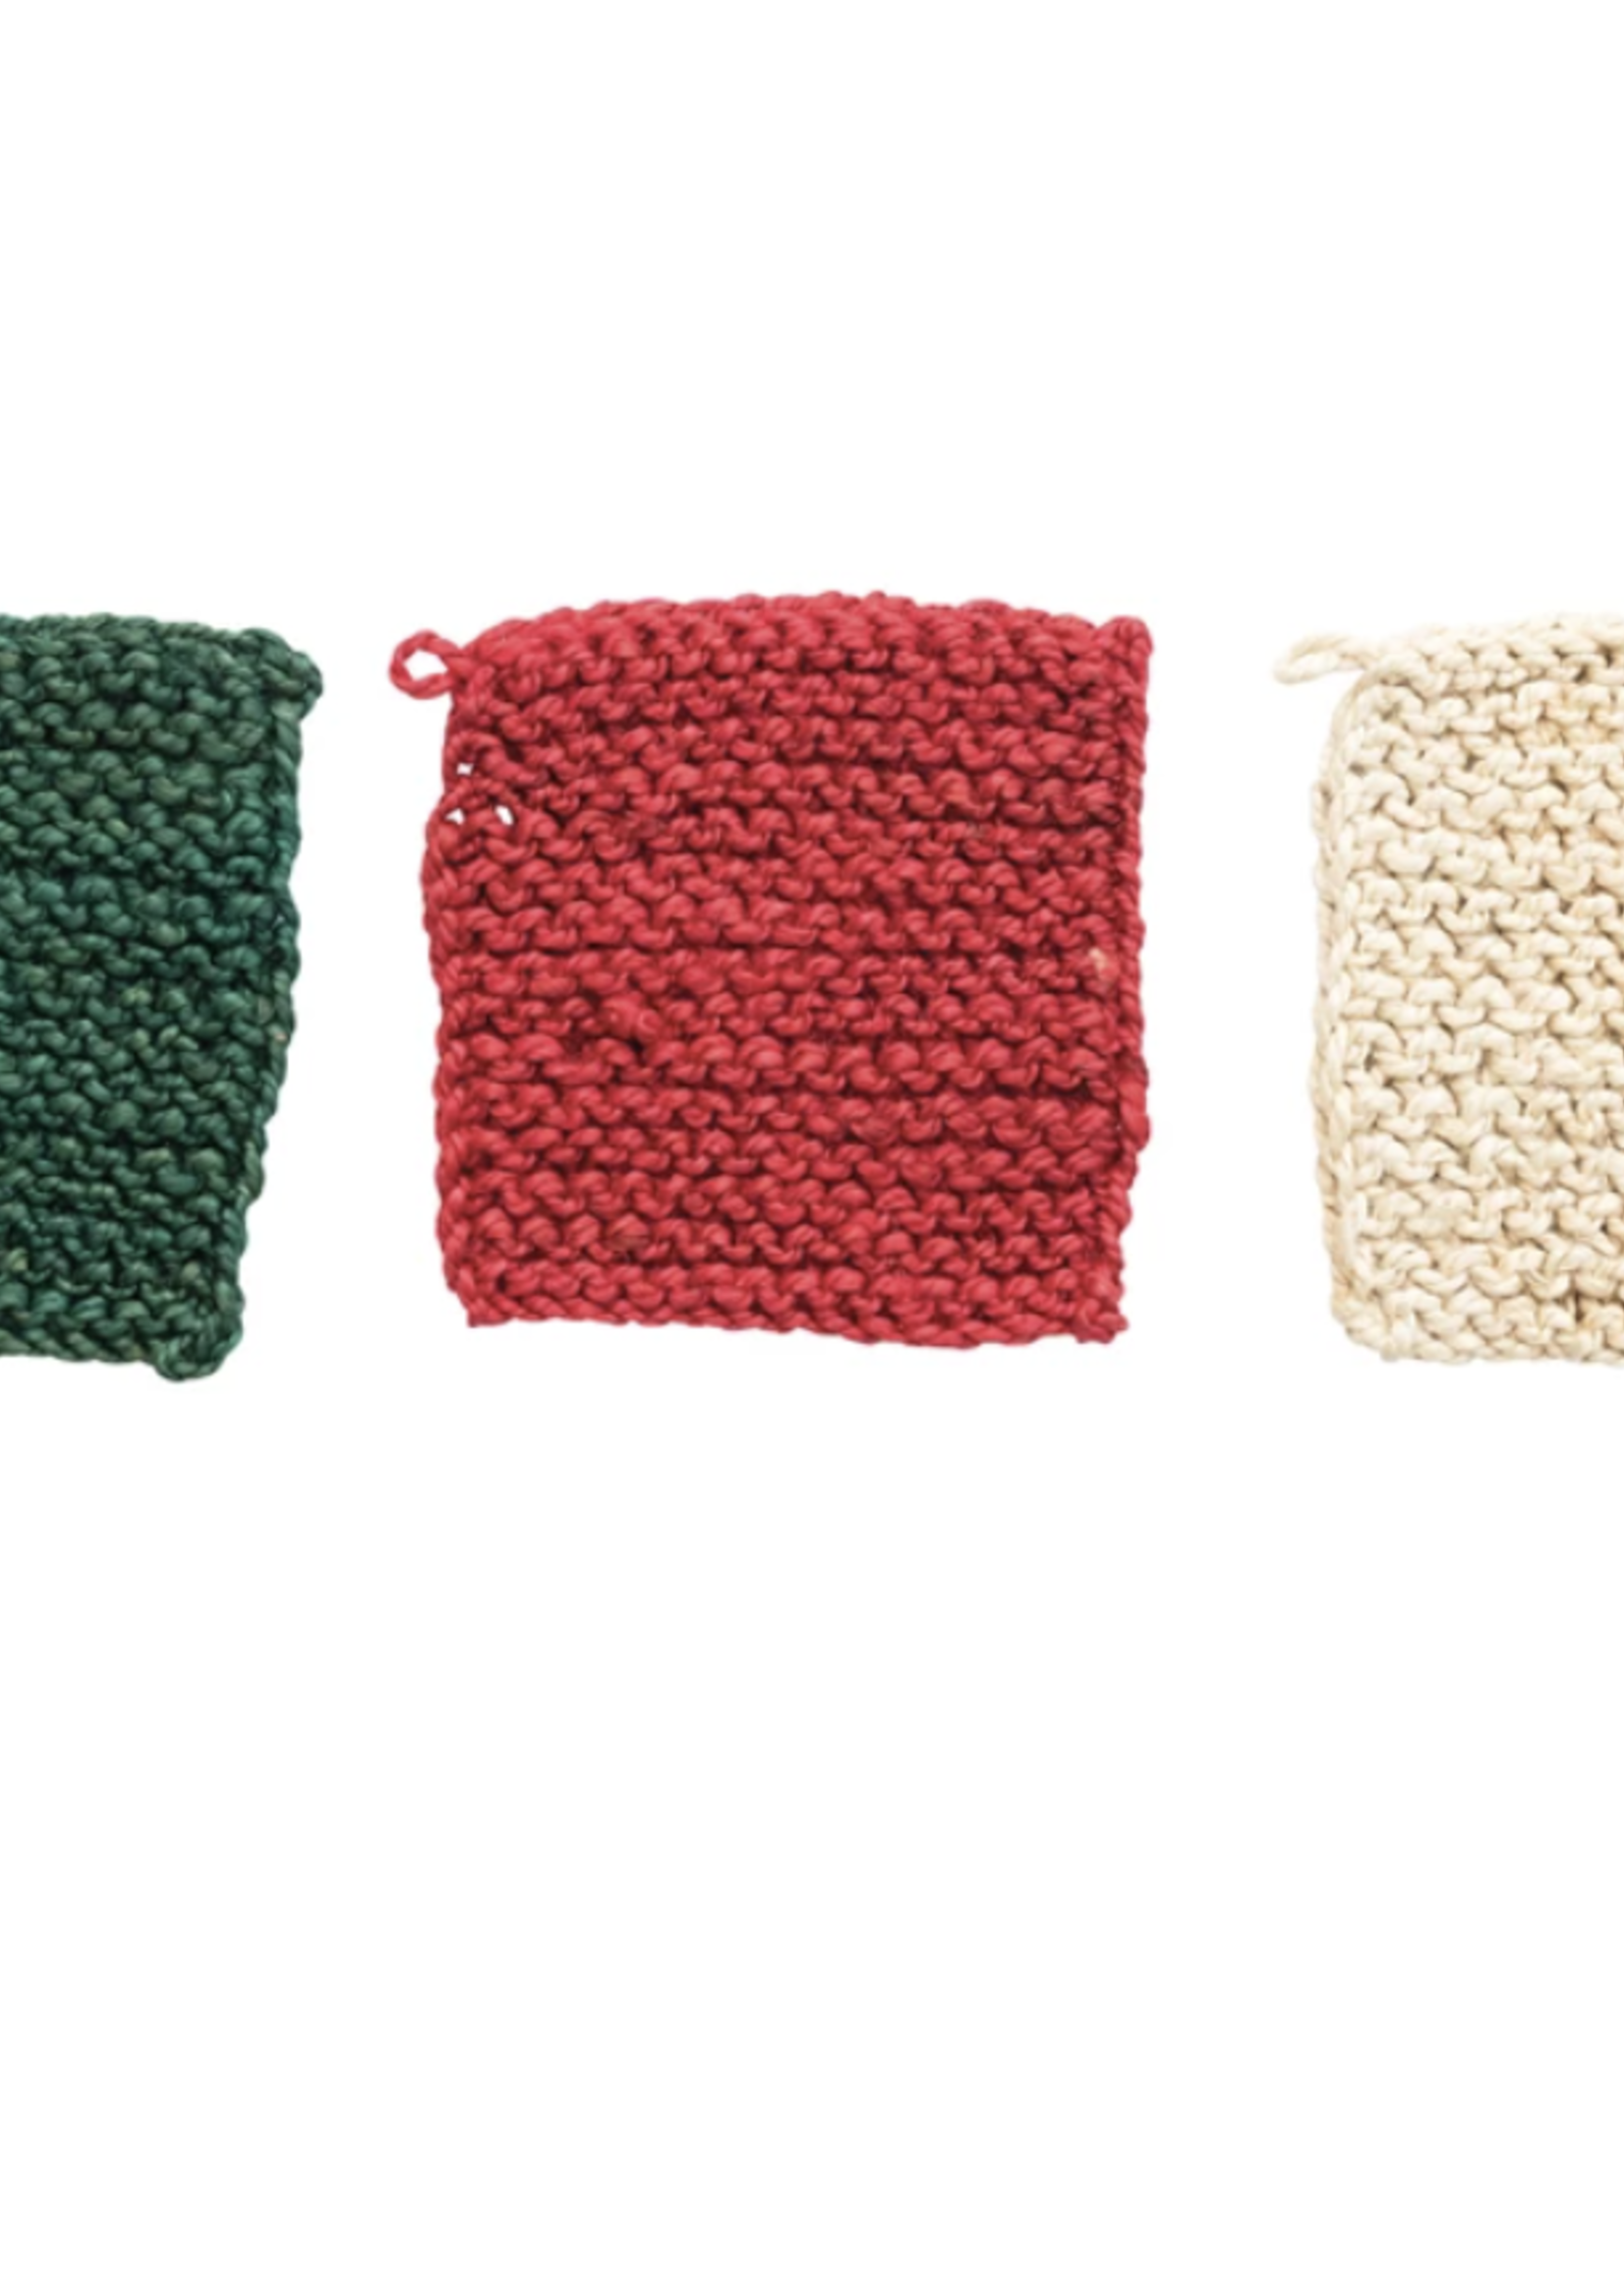 Creative Co-Op 8" Square Jute Crocheted Pot Holder, 3 Colors